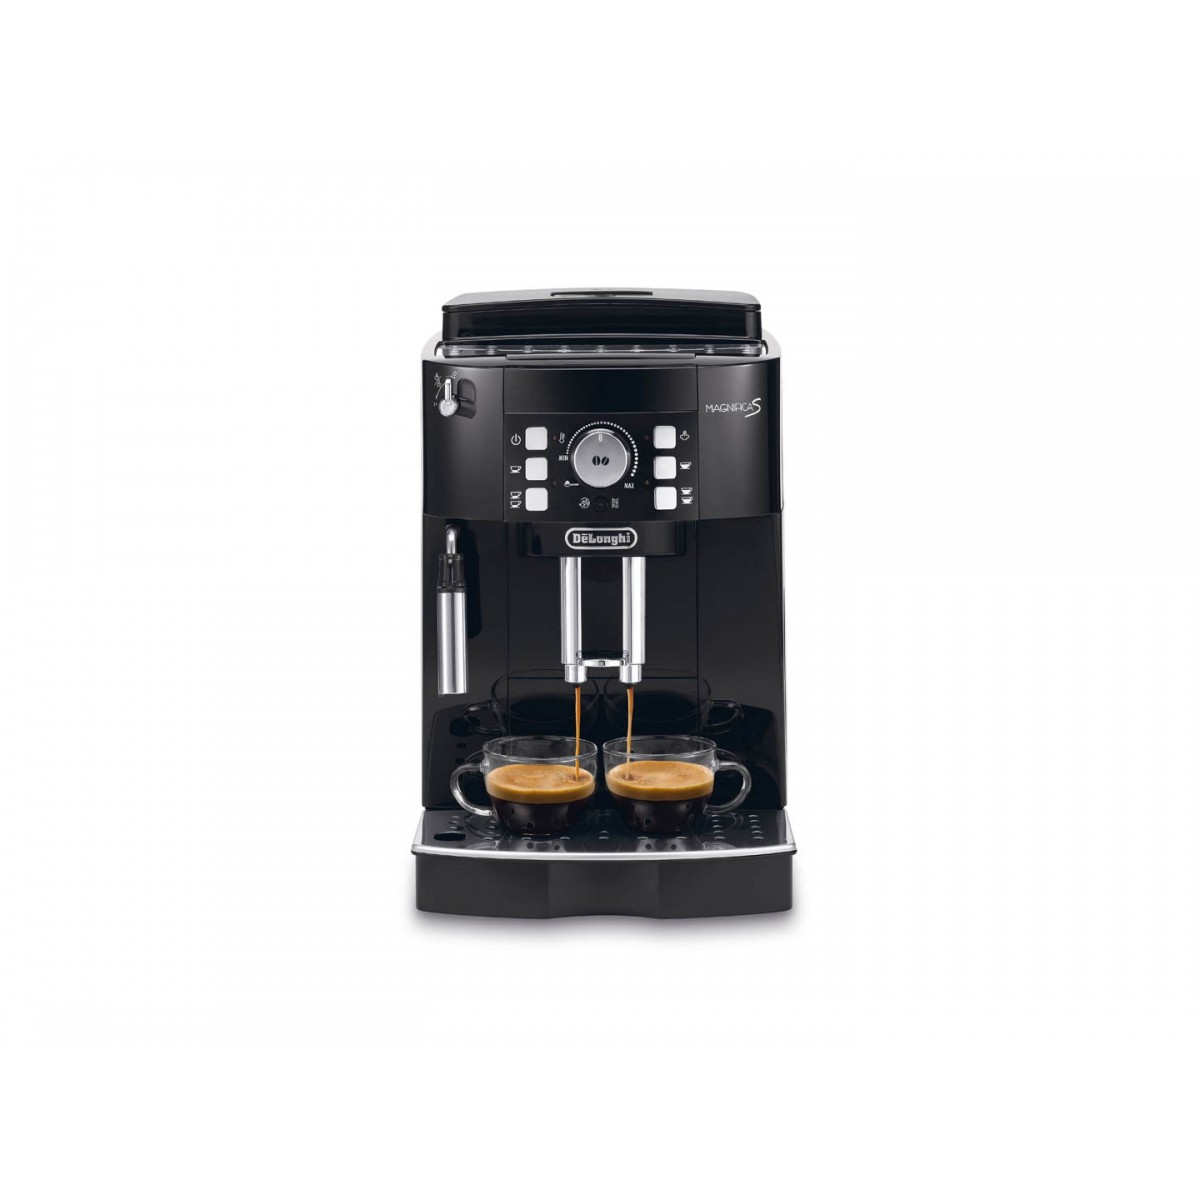 De Longhi Magnifica S - Espresso machine - 1.8 L - Coffee beans,Ground coffee - Built-in grinder - 1450 W - Black